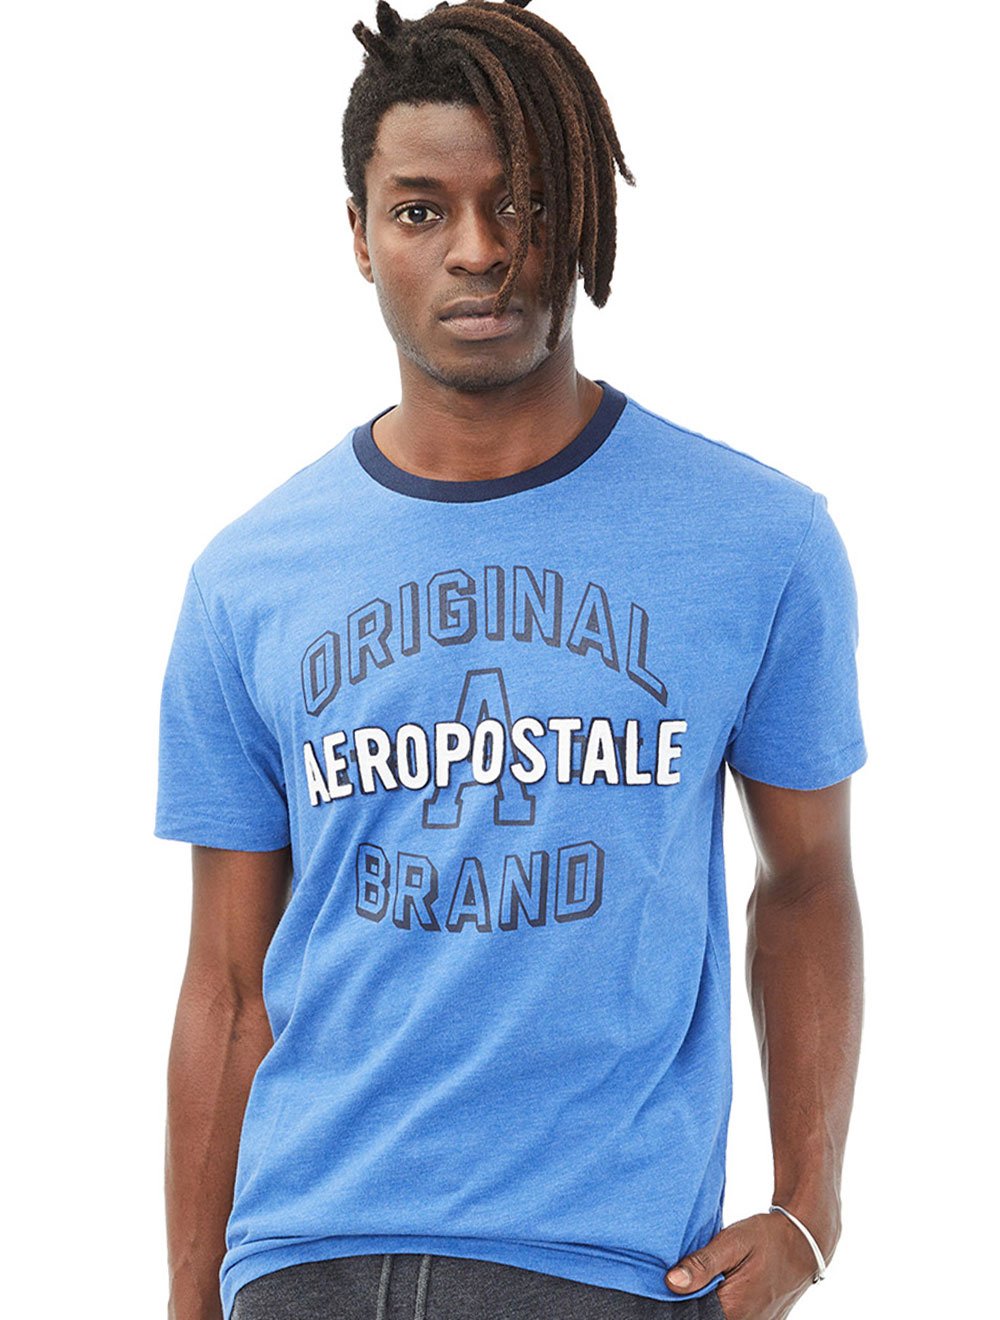 Camiseta Aeropostale Masculina Original A Brand Azul Mescla